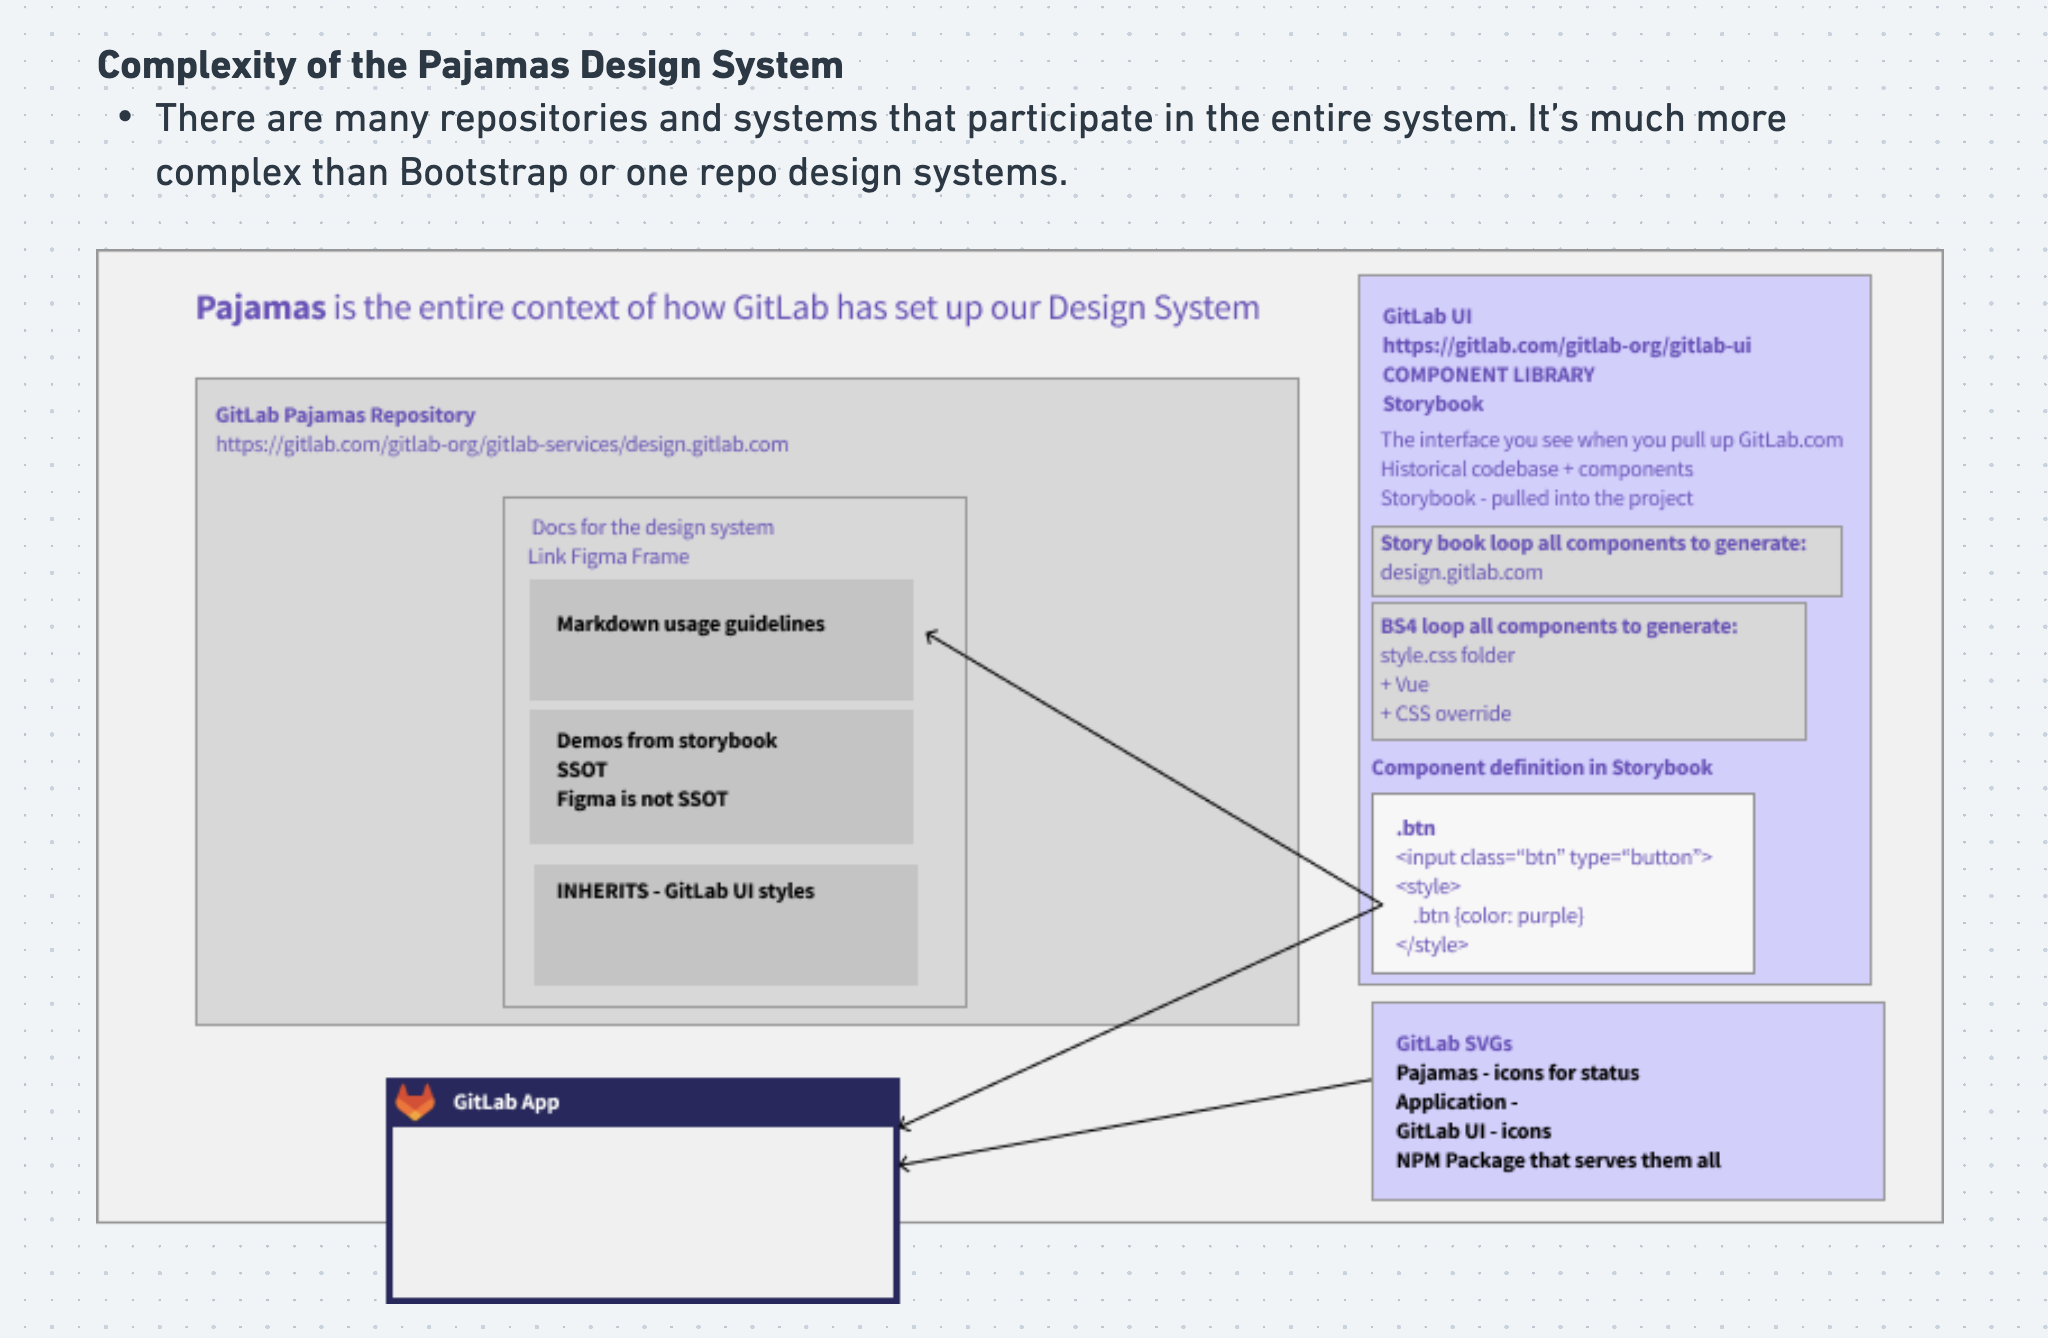 pajamas-diagram-complexity.png